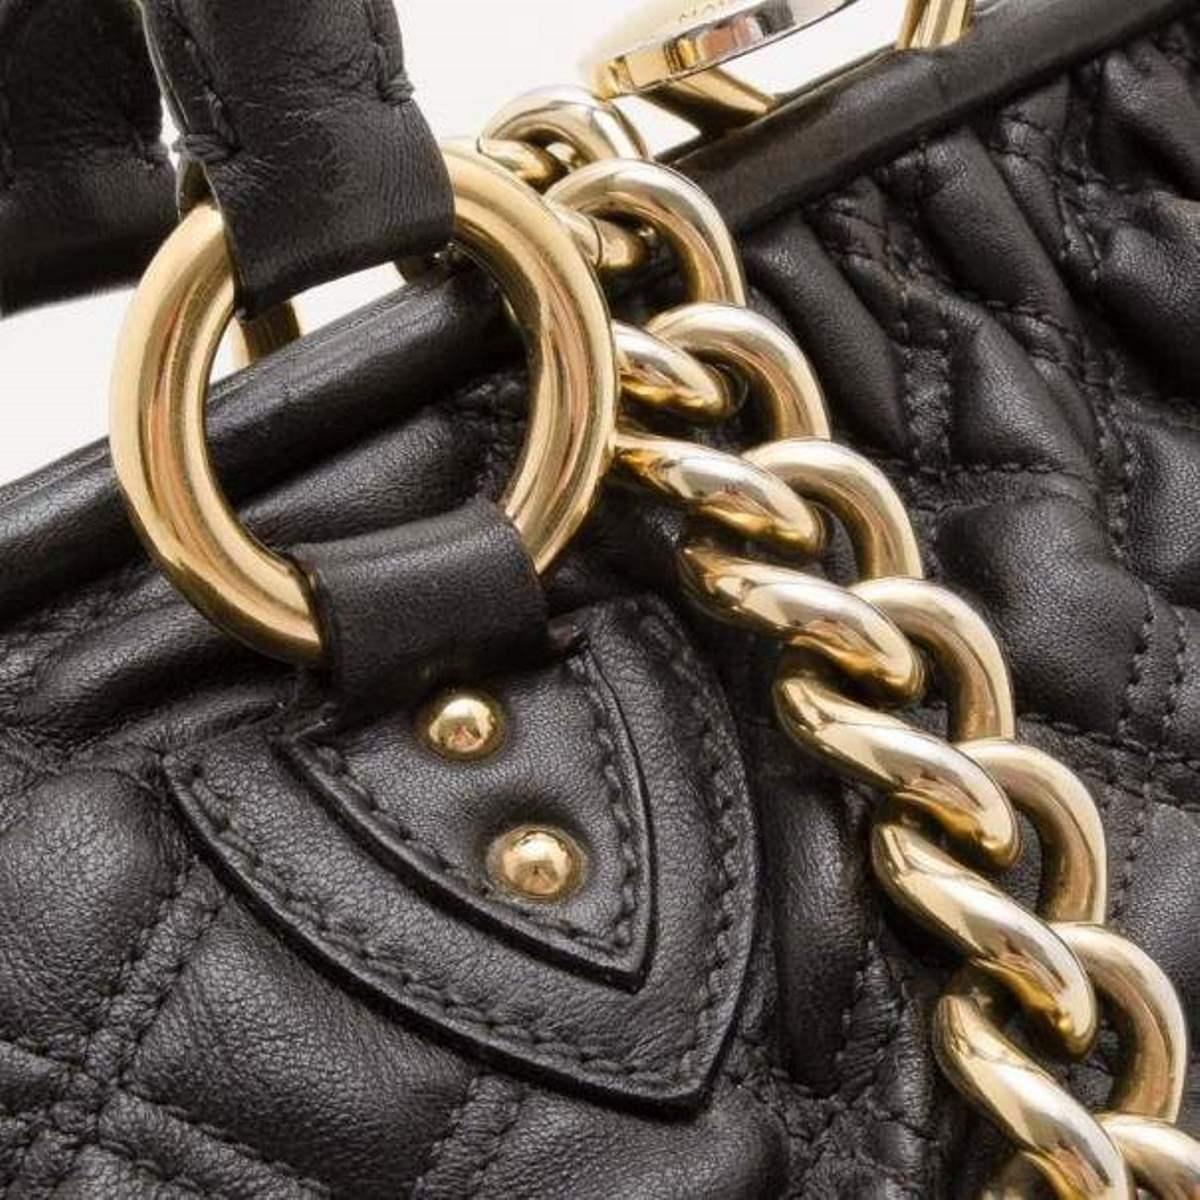 Marc Jacobs Black Quilted Leather Stam Satchel In Fair Condition For Sale In Dubai, Al Qouz 2